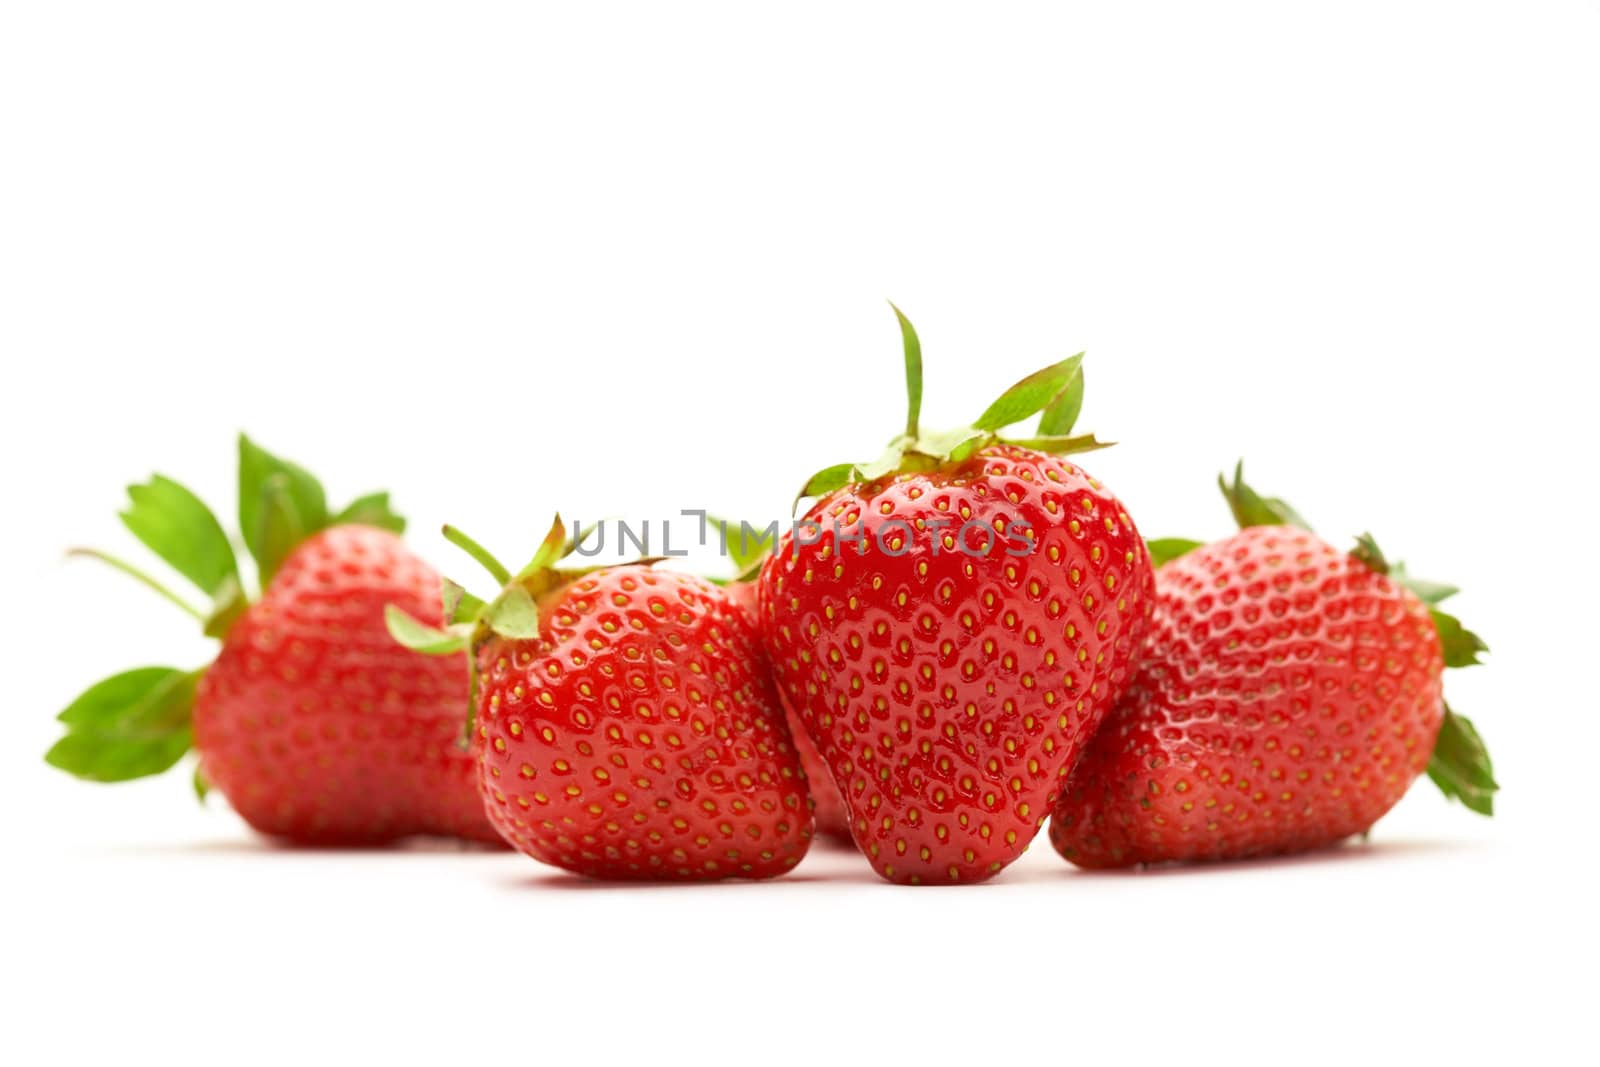 Strawberries by romanshyshak